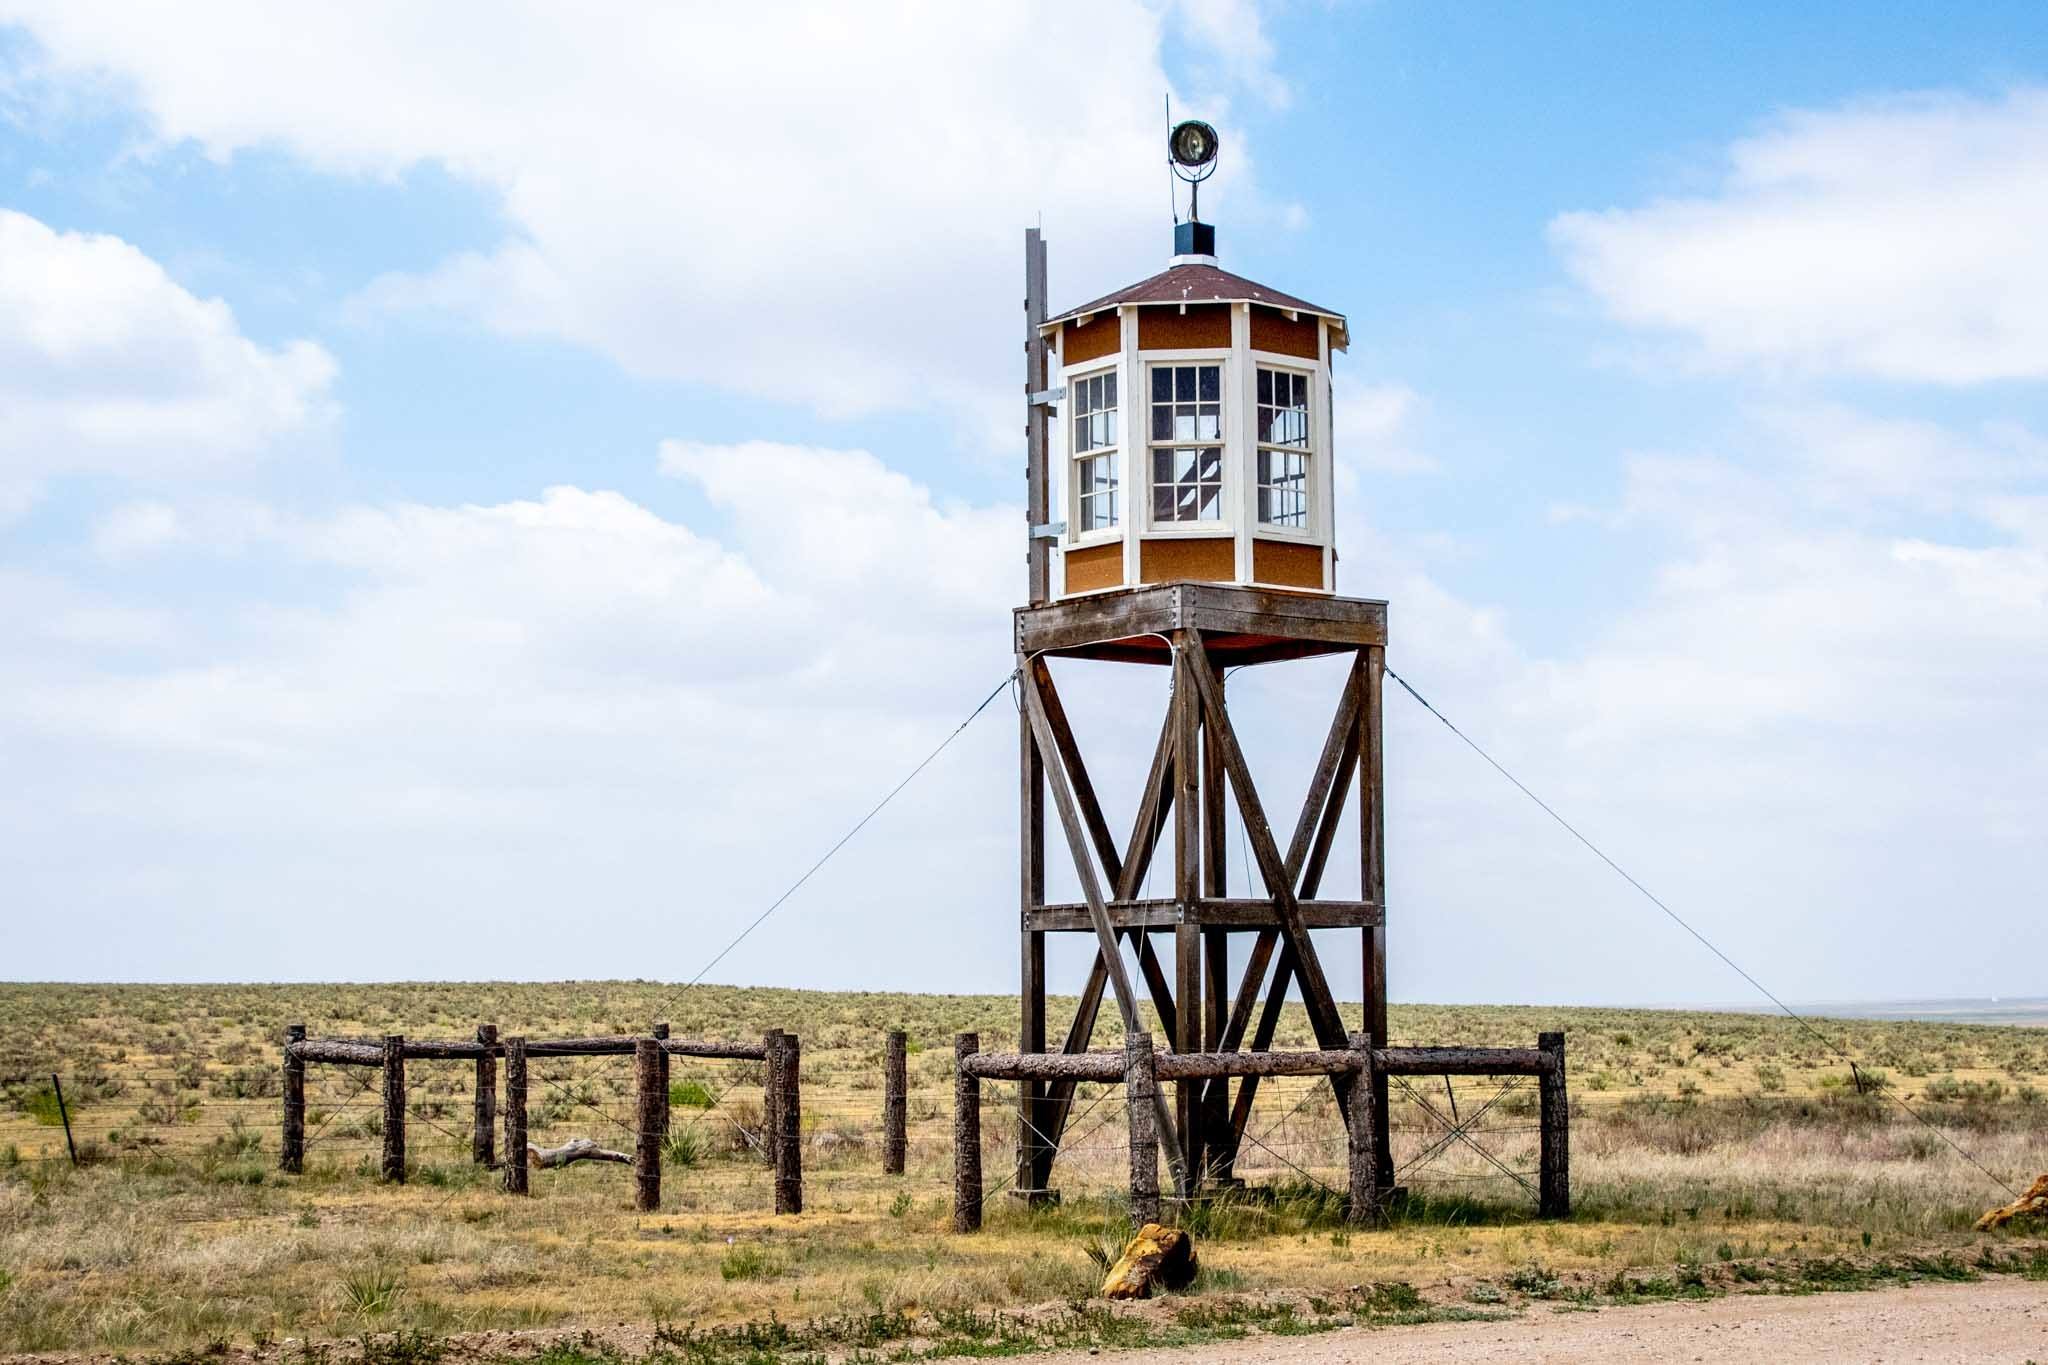 The Camp Amache guard tower in Colorado